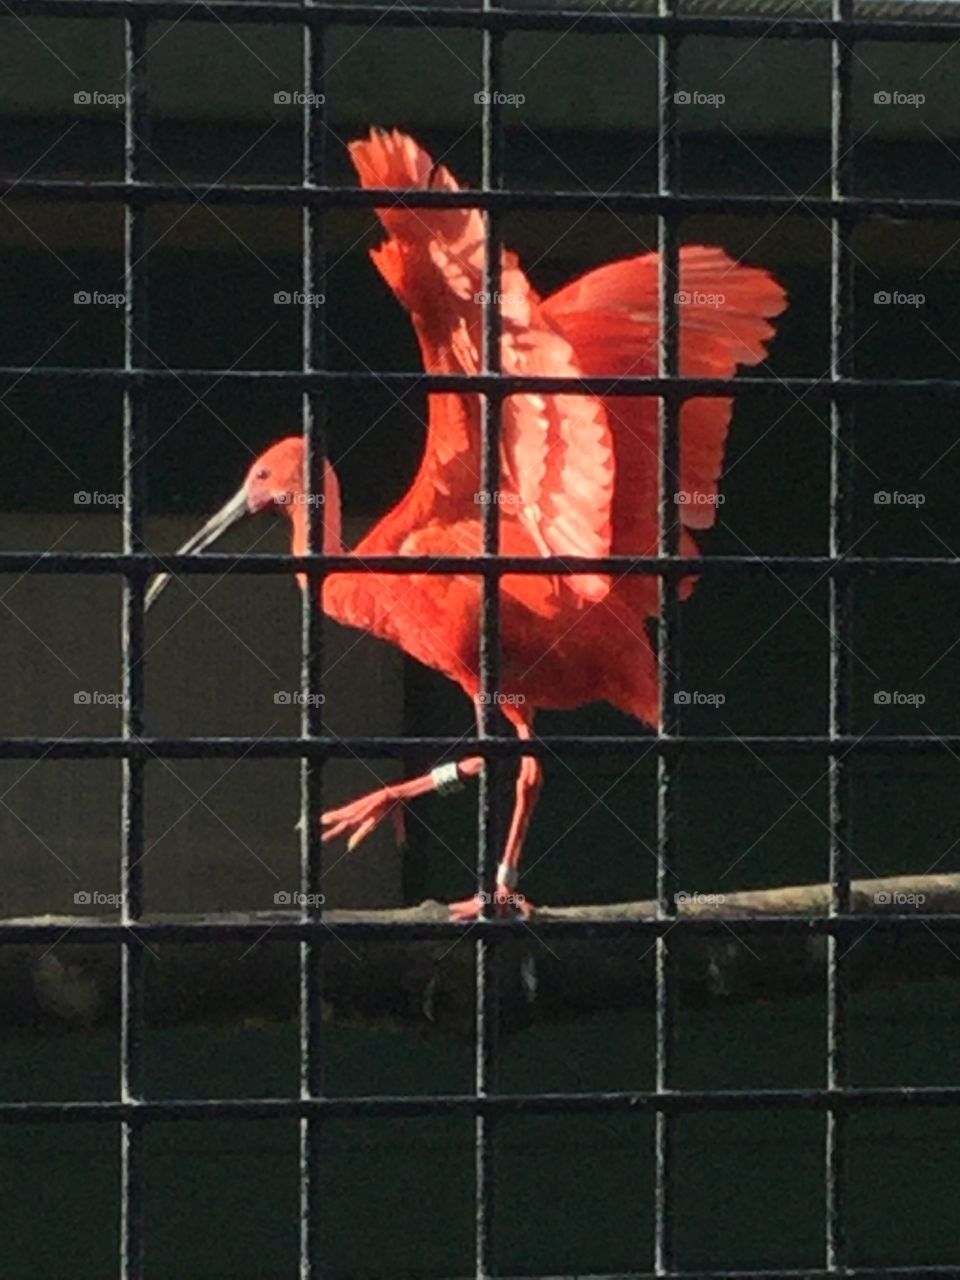 Stunning bird, in the zoo. 